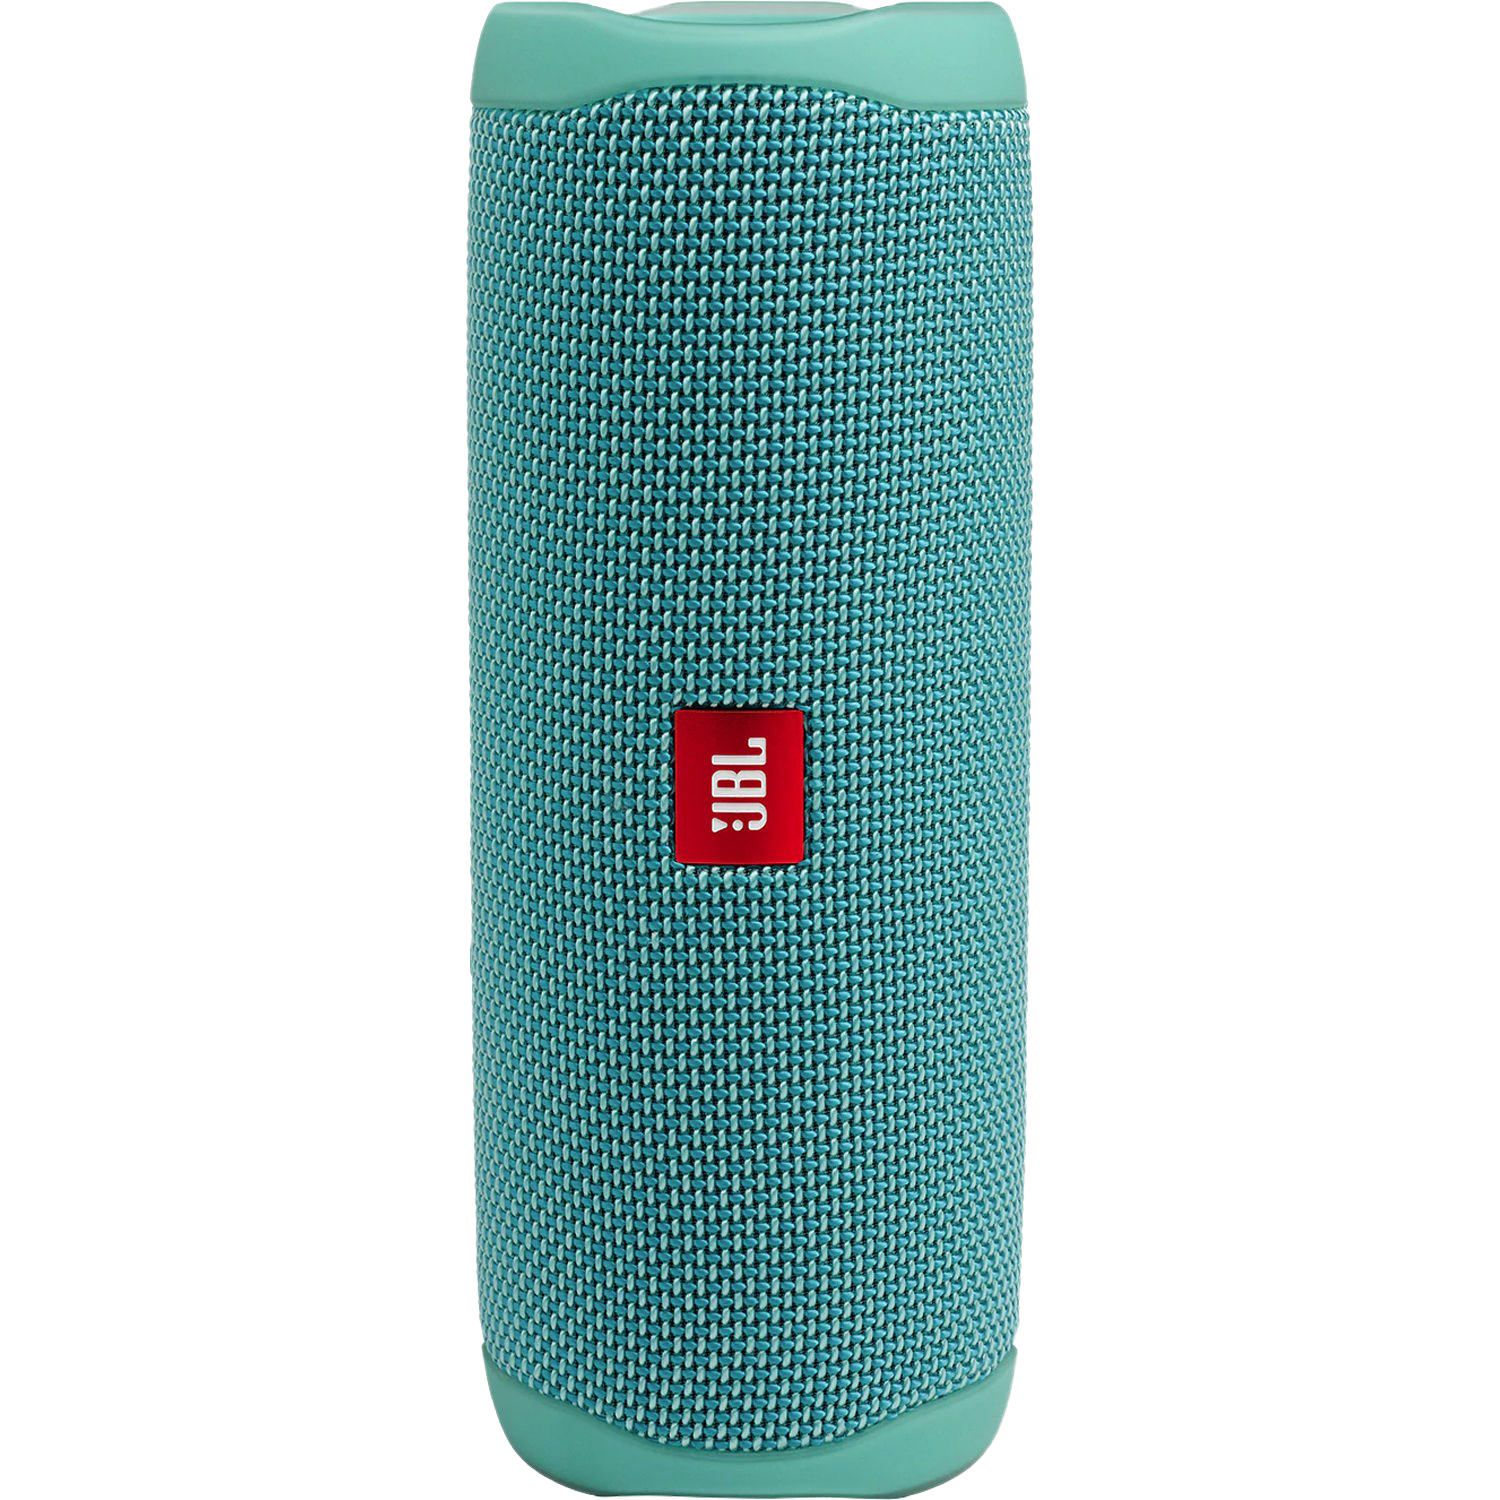 Waterproof Speaker PNG Transparent Image